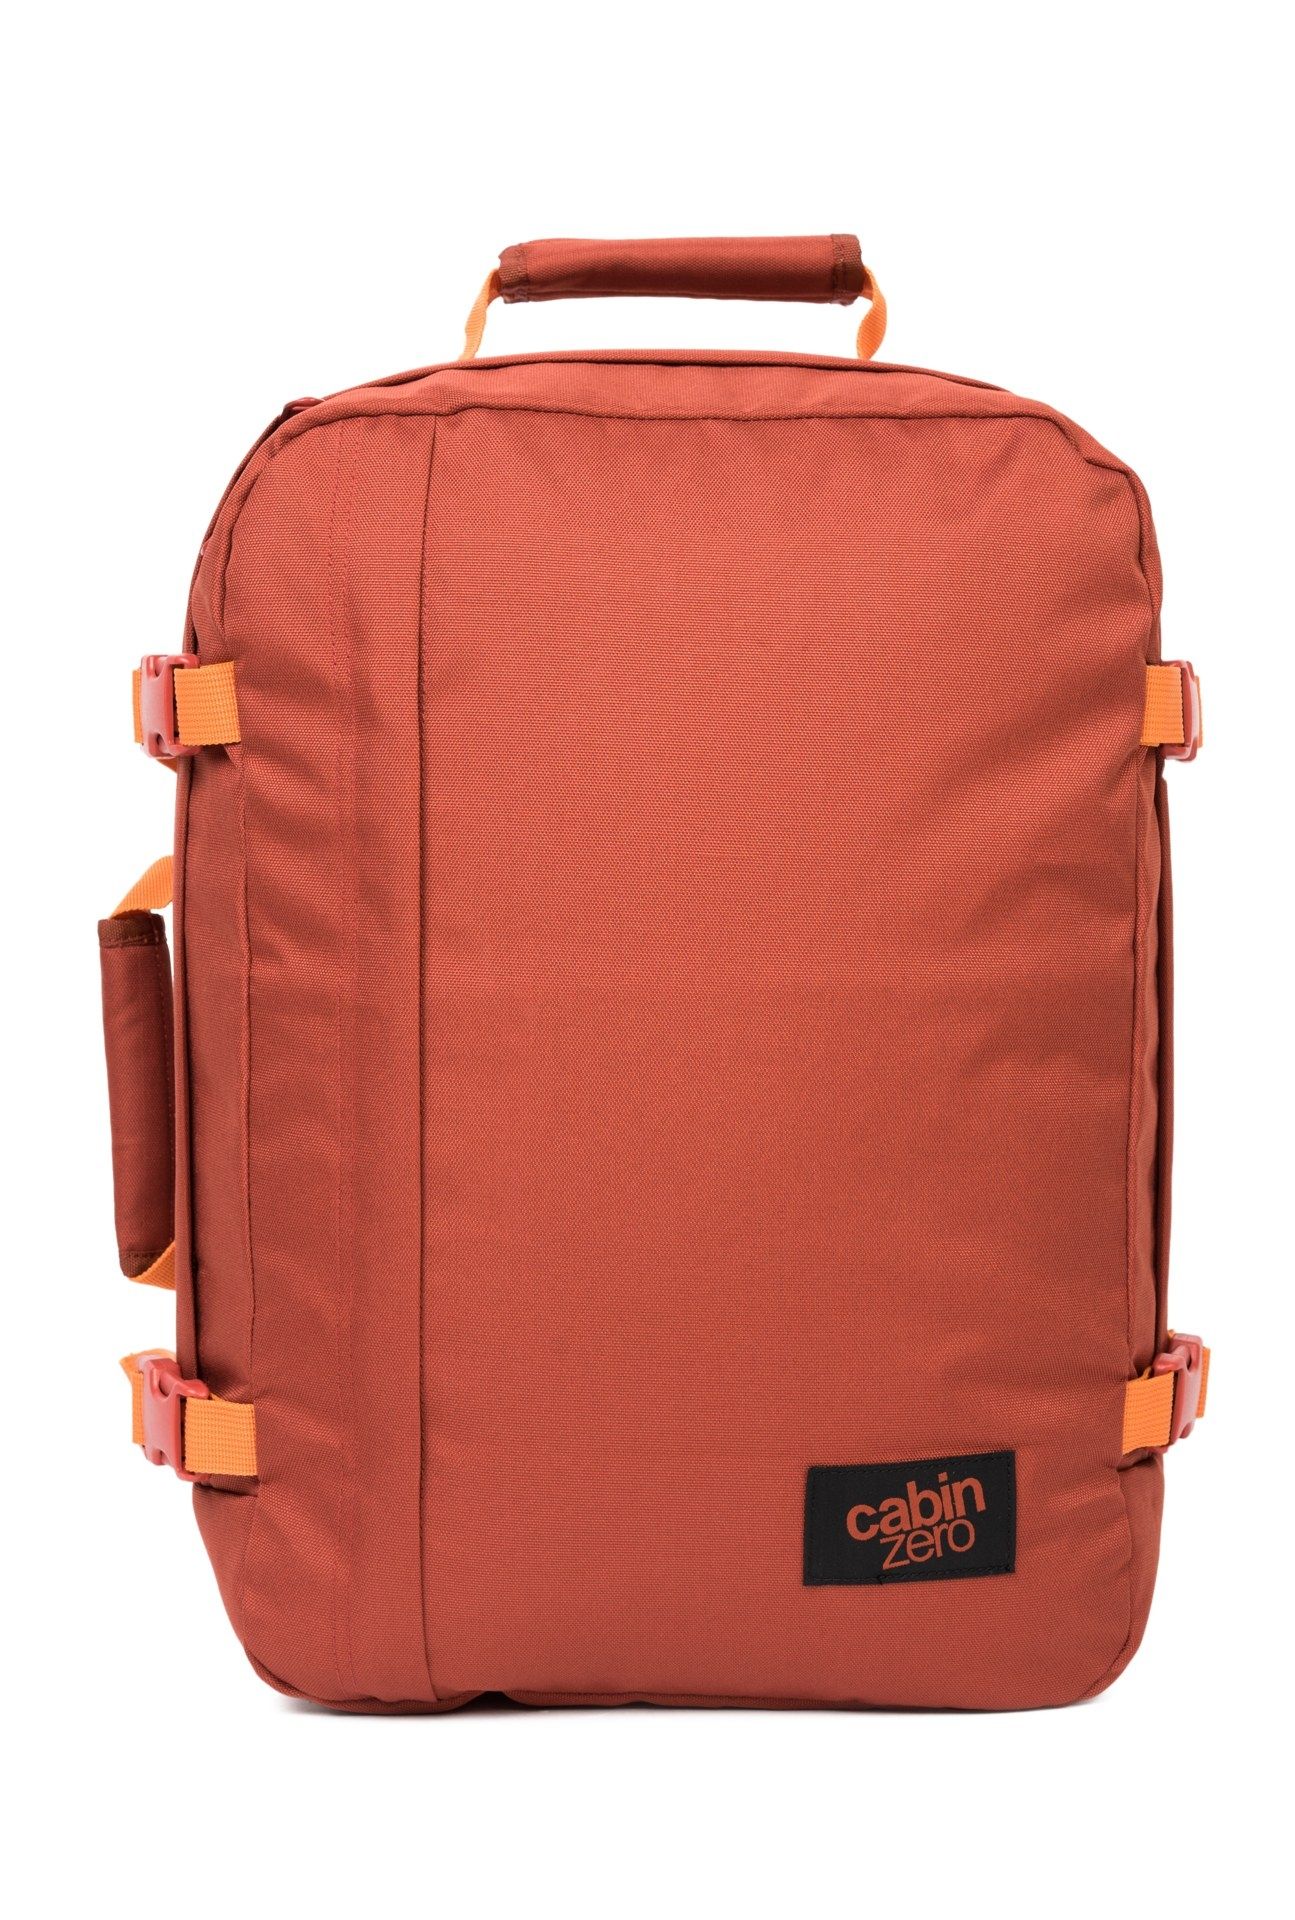 Batoh CABINZERO CLASSIC: lehký stylový batoh v mnoha variantách